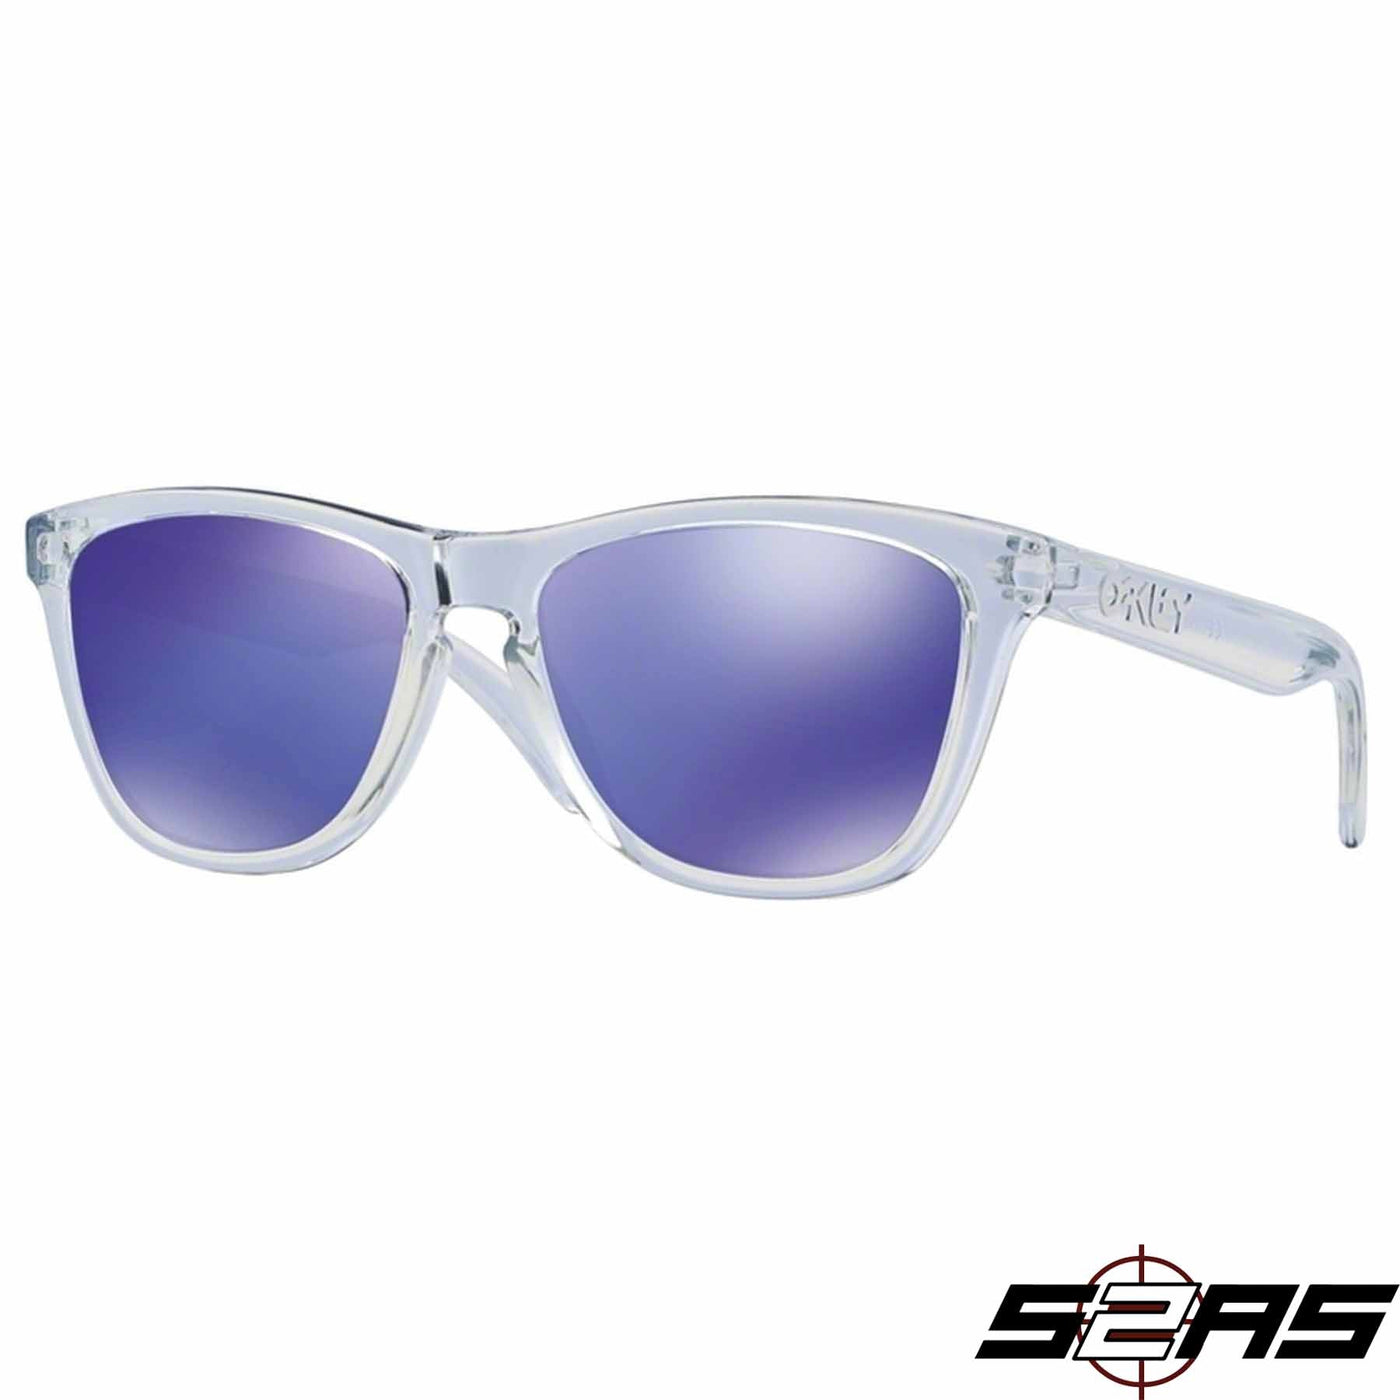 Oakley Frogskins Sunglasses (Polished Clear/Violet Iridium) OAKLEY